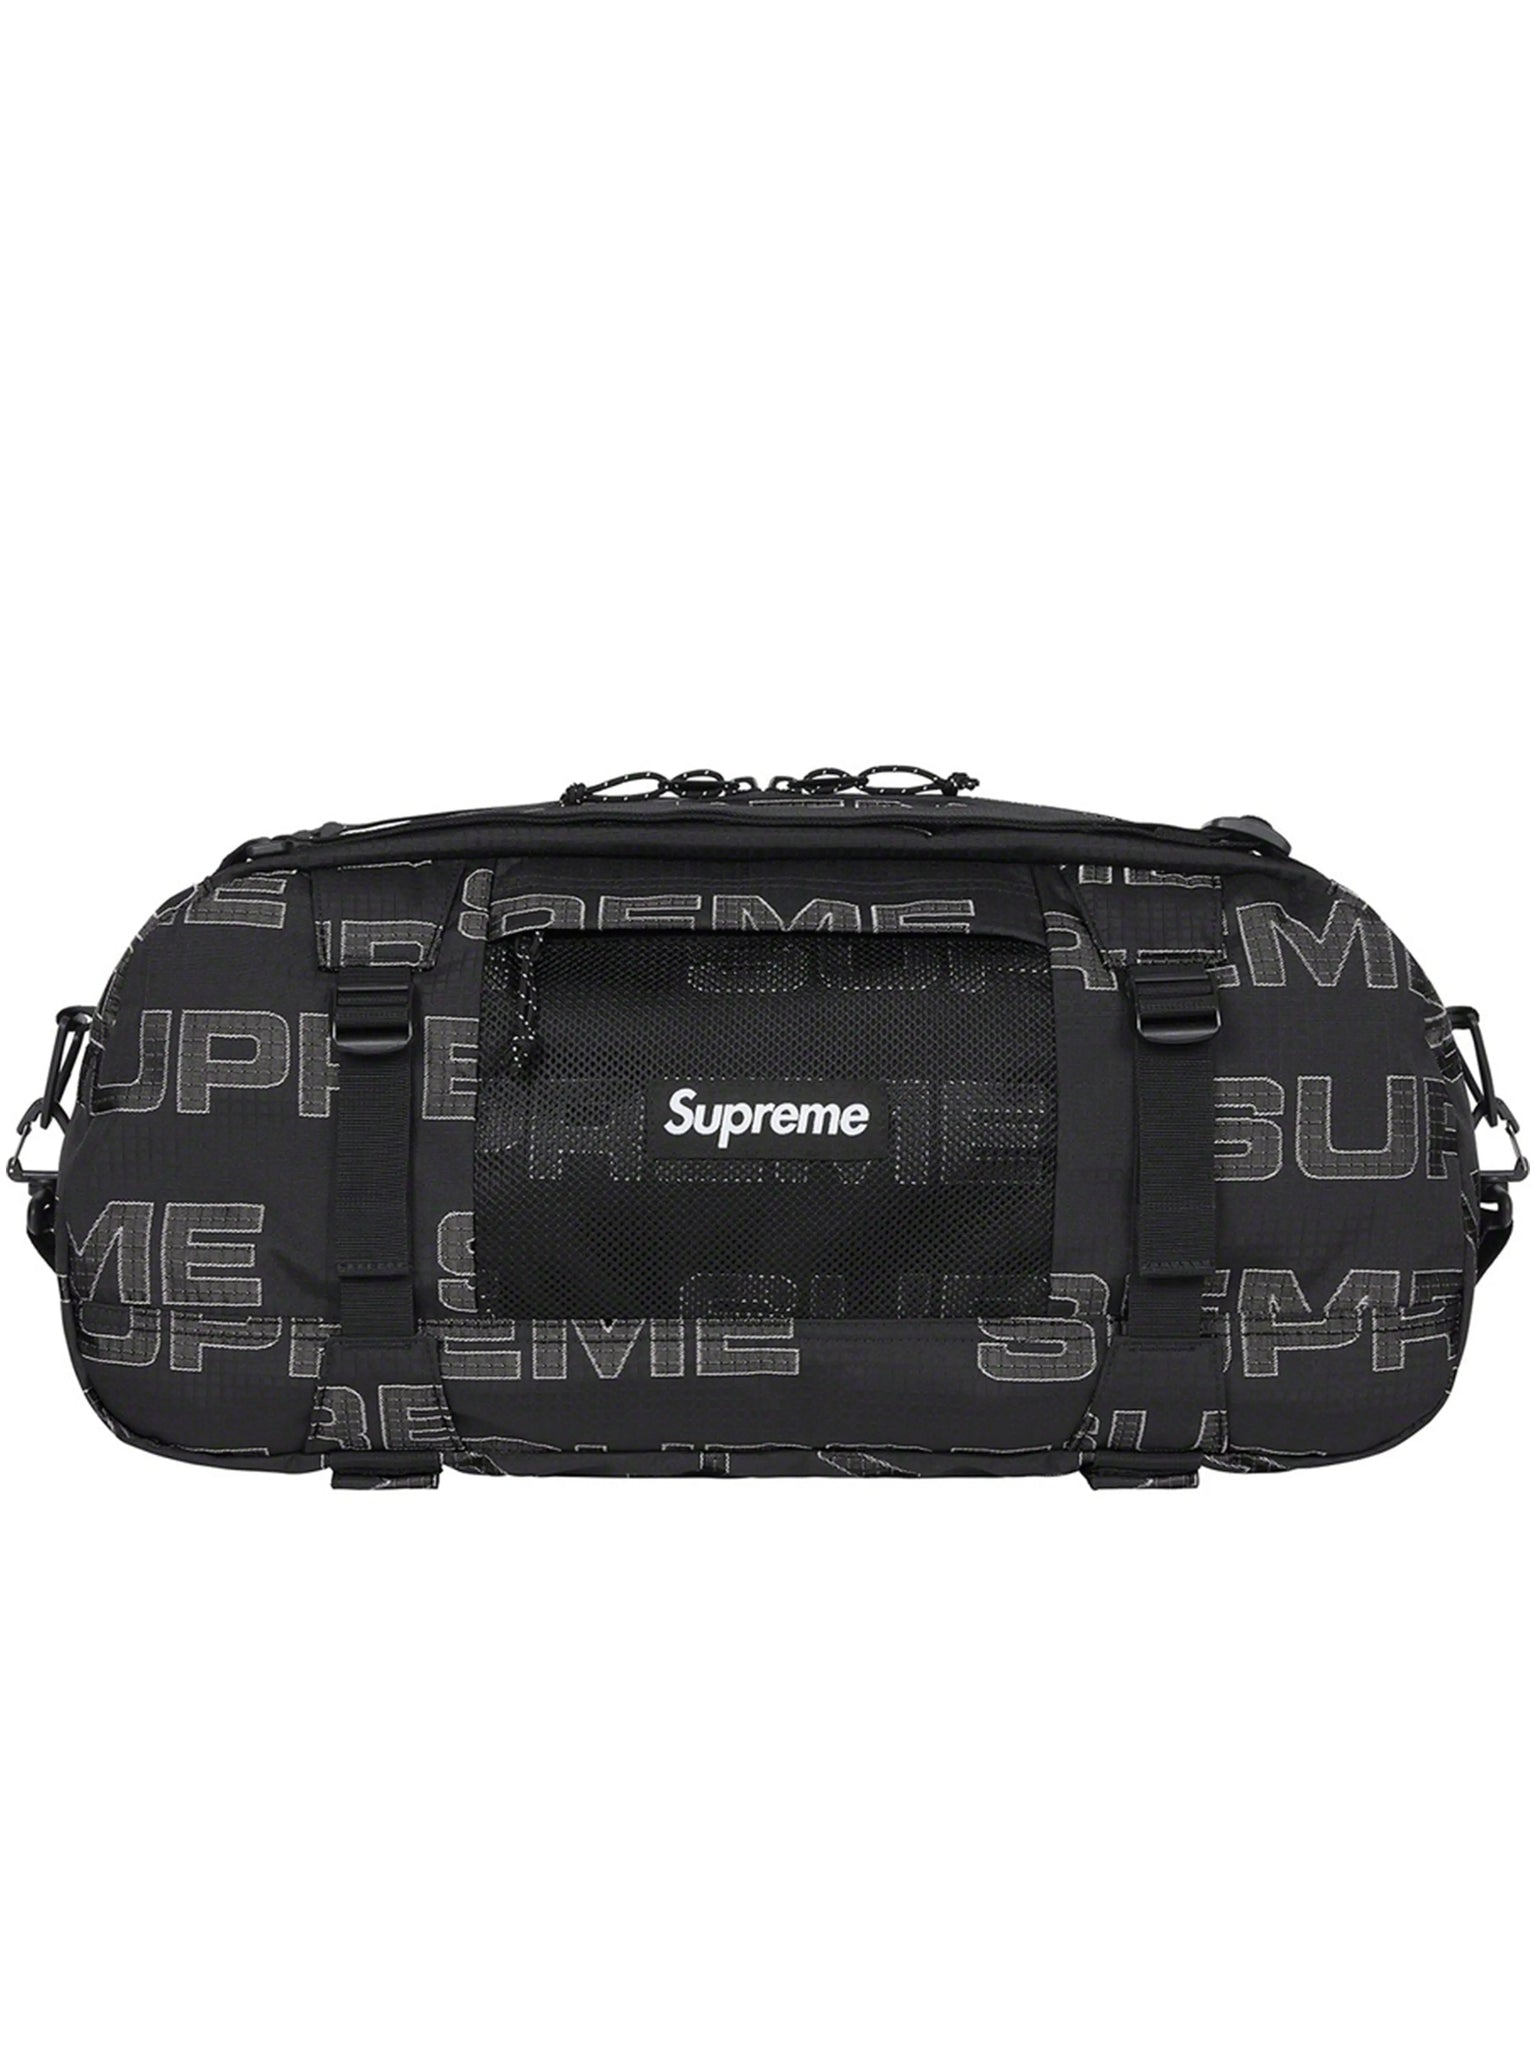 Supreme Duffle Bag Black [FW21] Prior